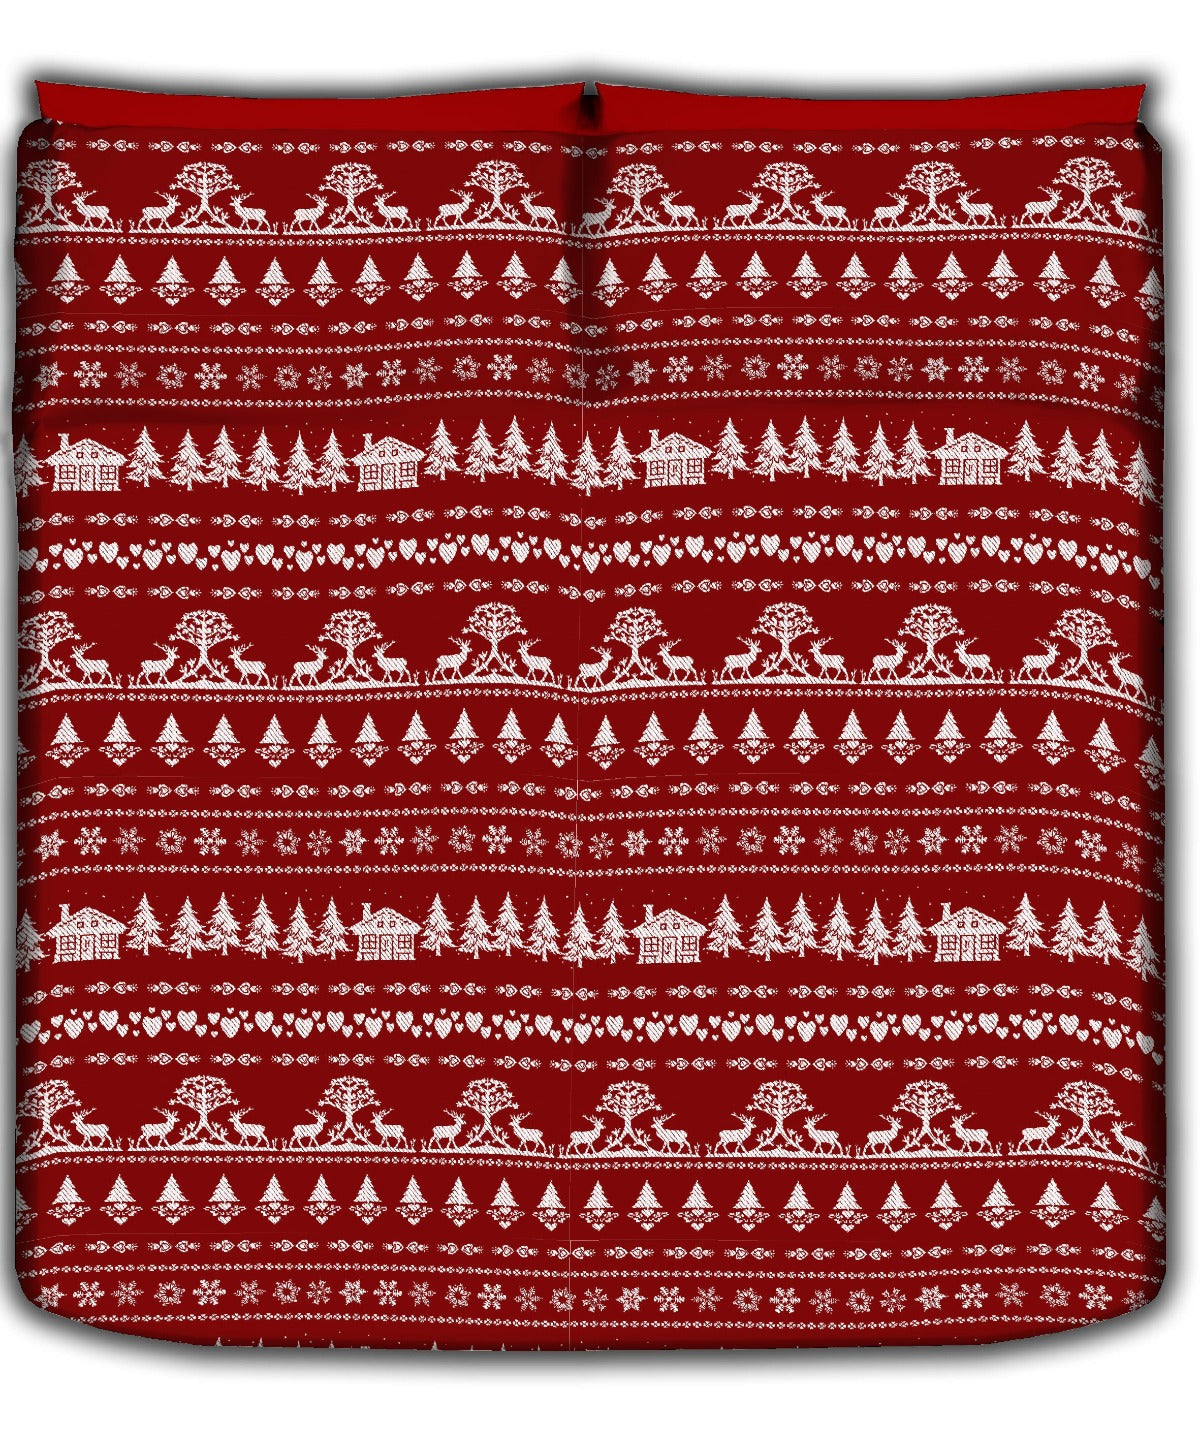 Mezzero - Reindeer and hut furnishing cloth